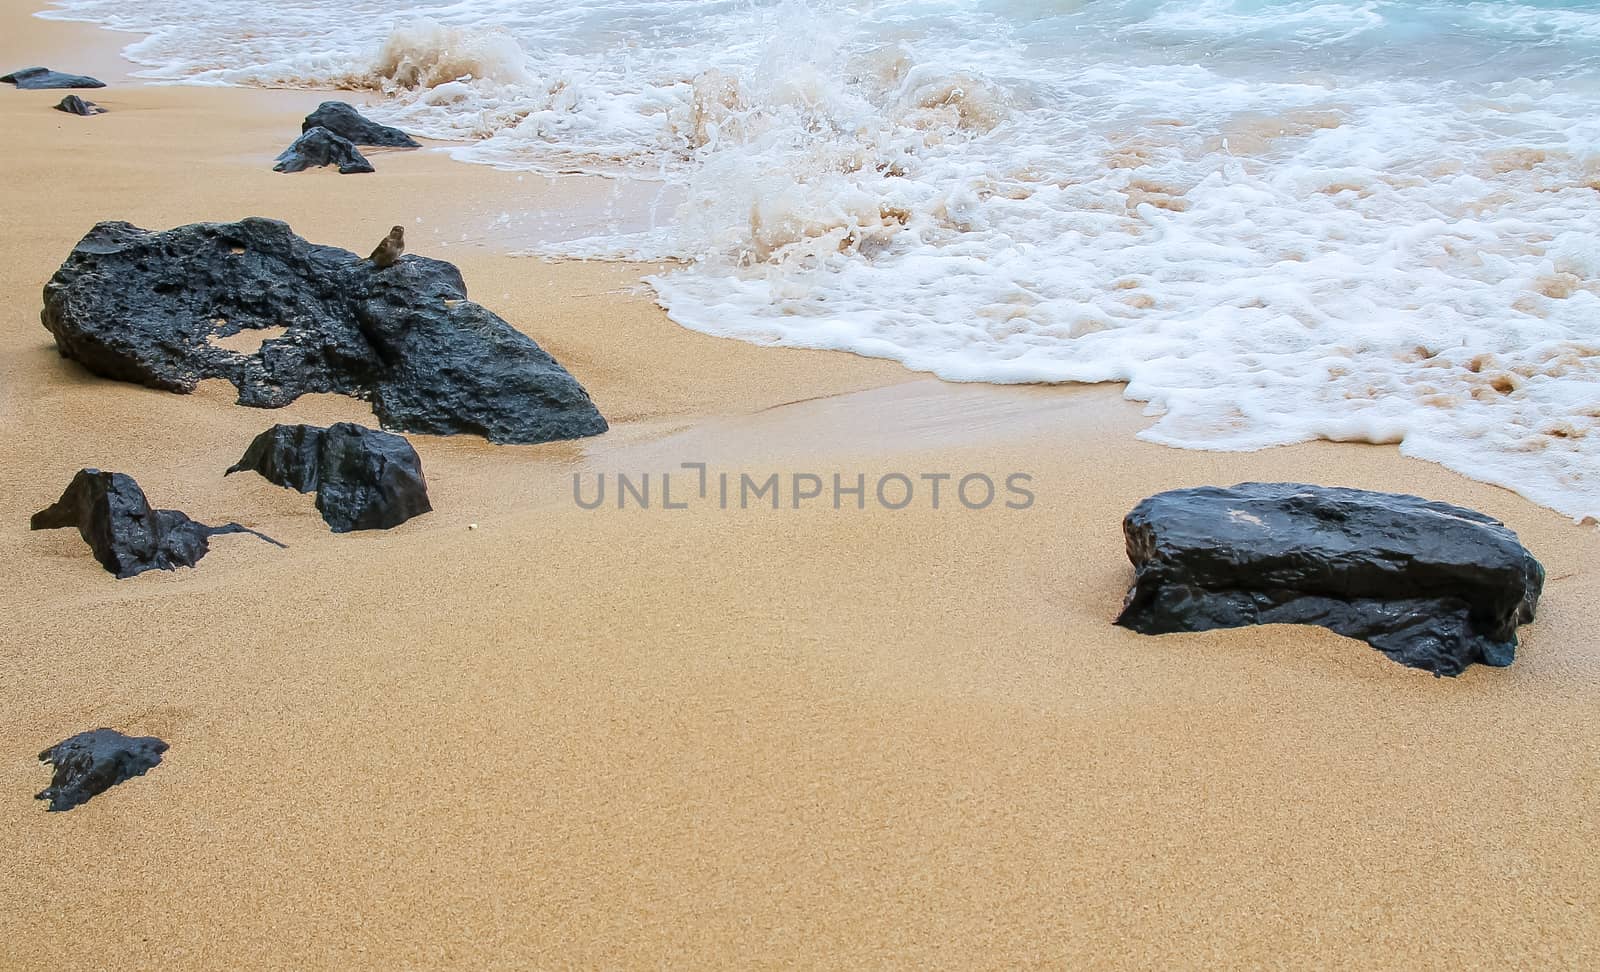 Volcanic rocks on the sands of Maui, Hawaii by Alexanderphoto